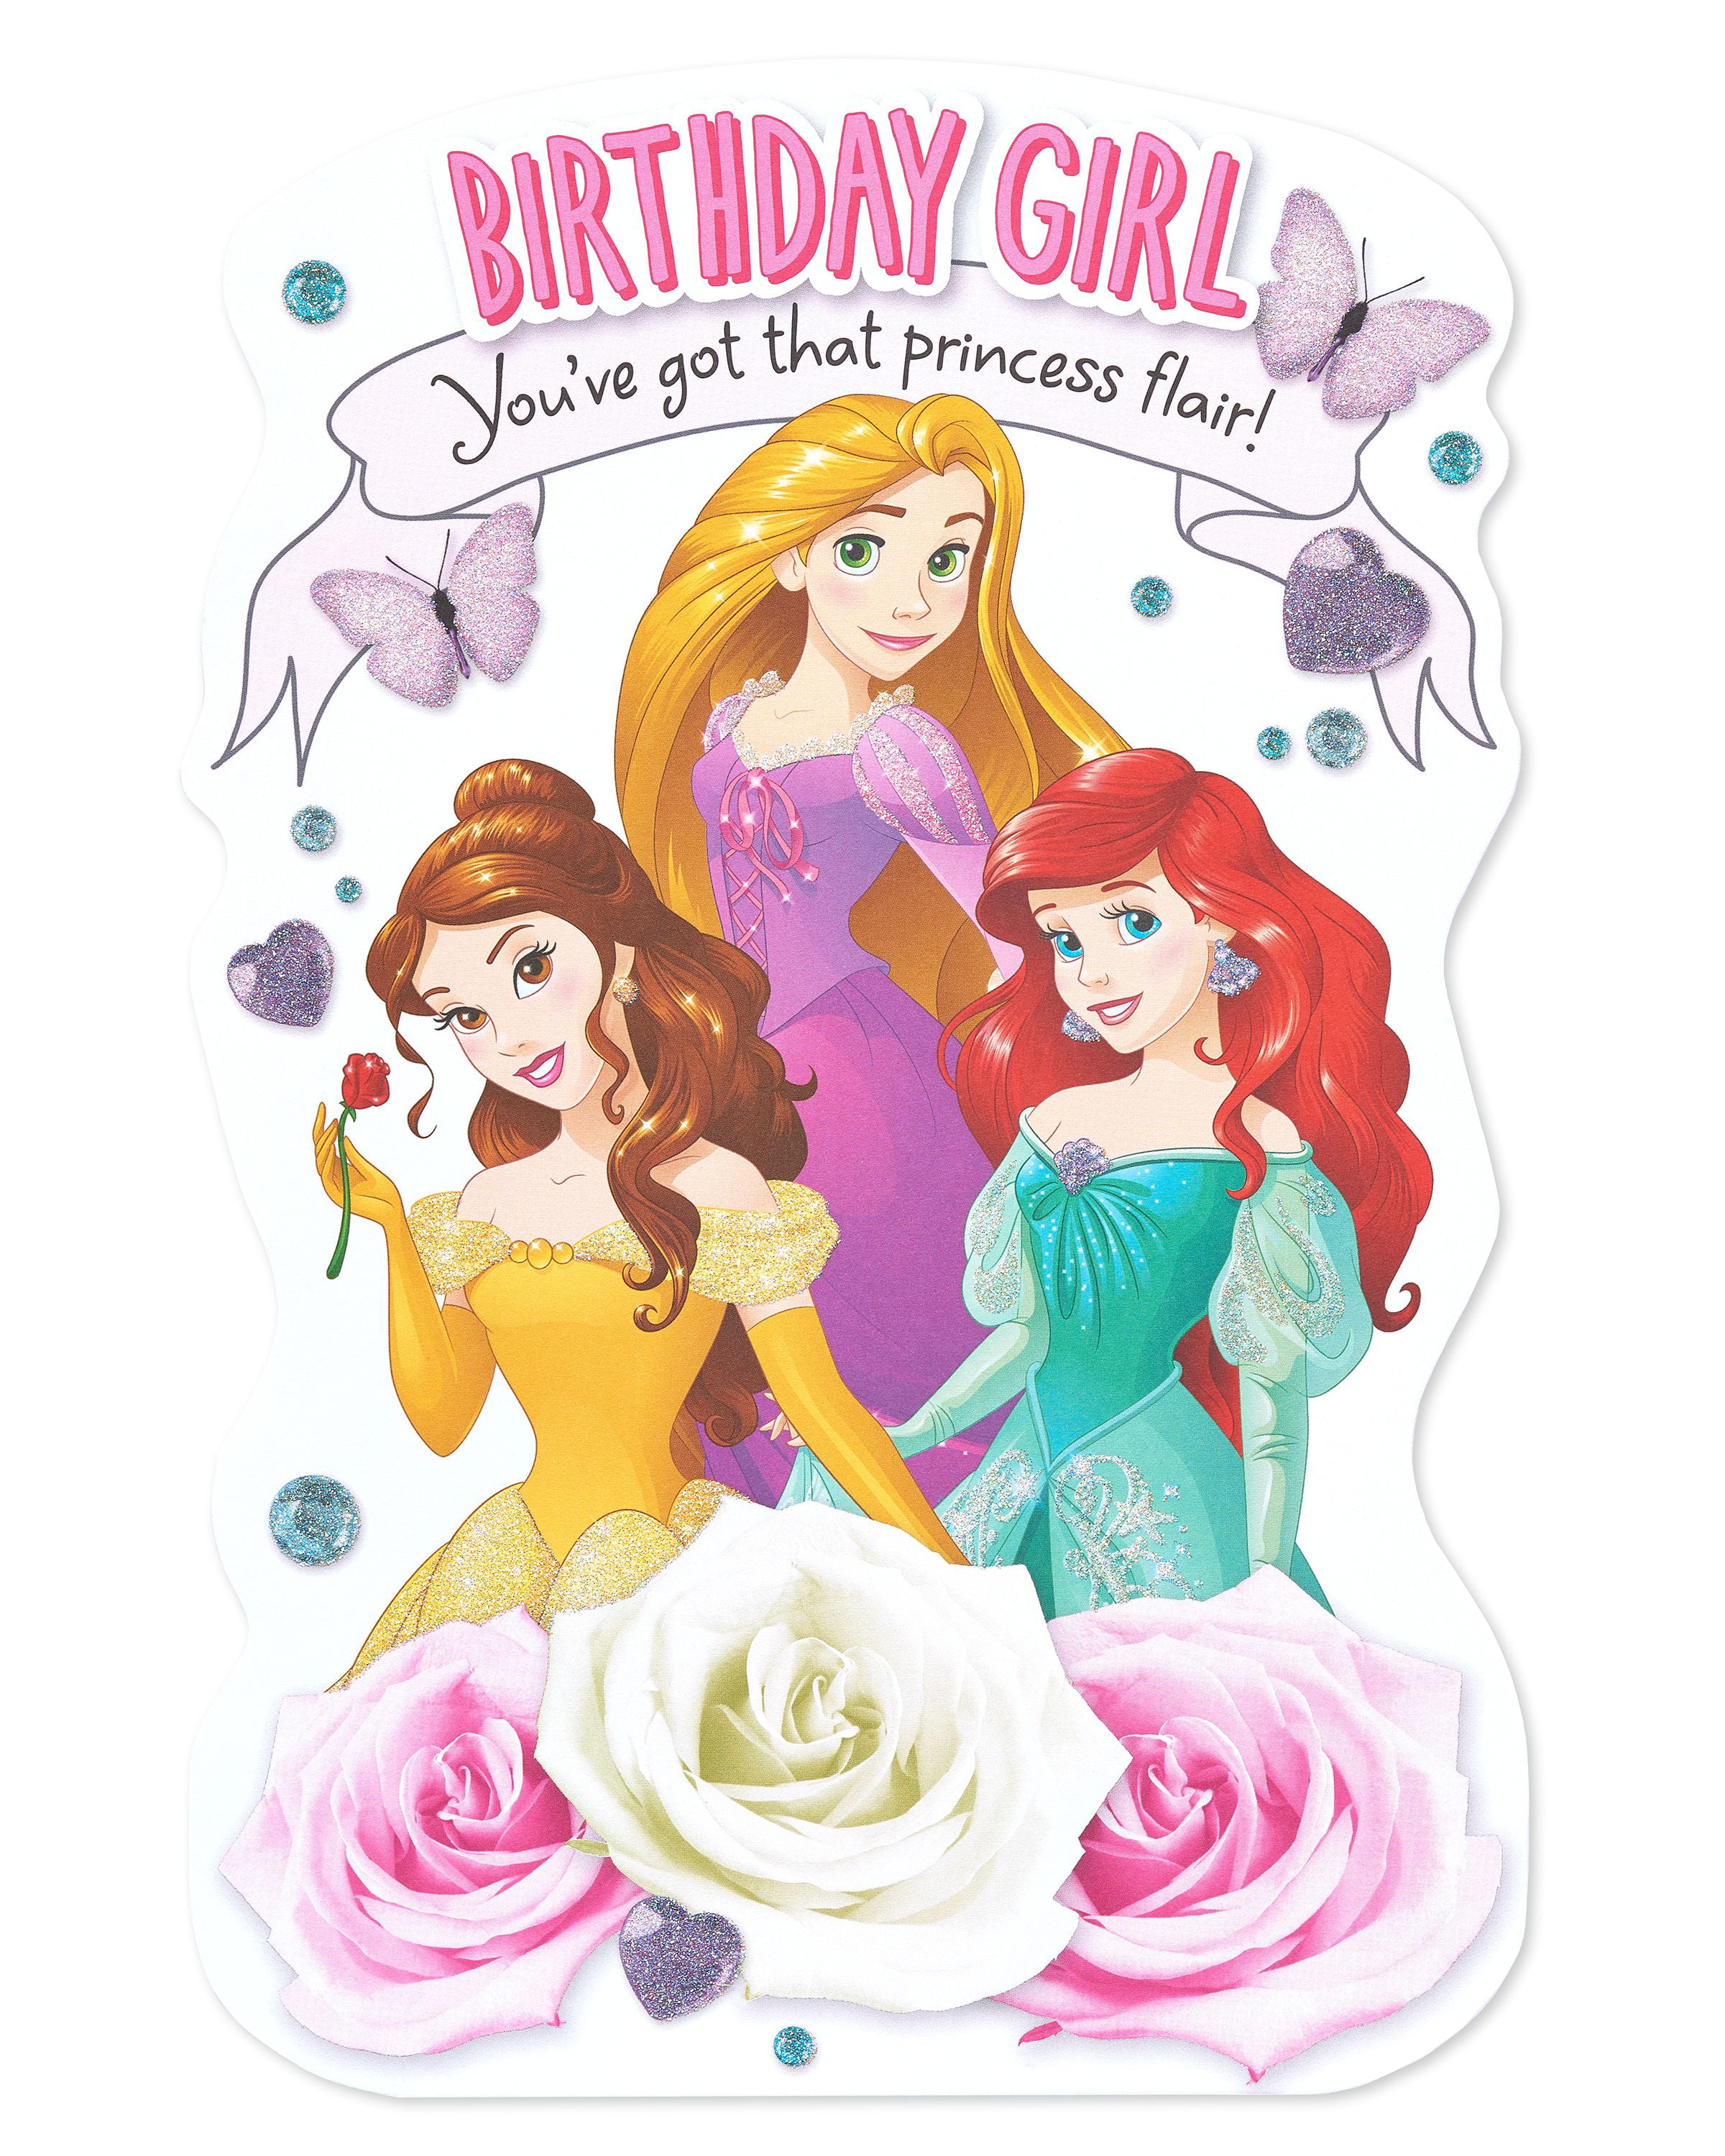 American Greetings Jumbo Disney Princess Birthday Card For Girl With